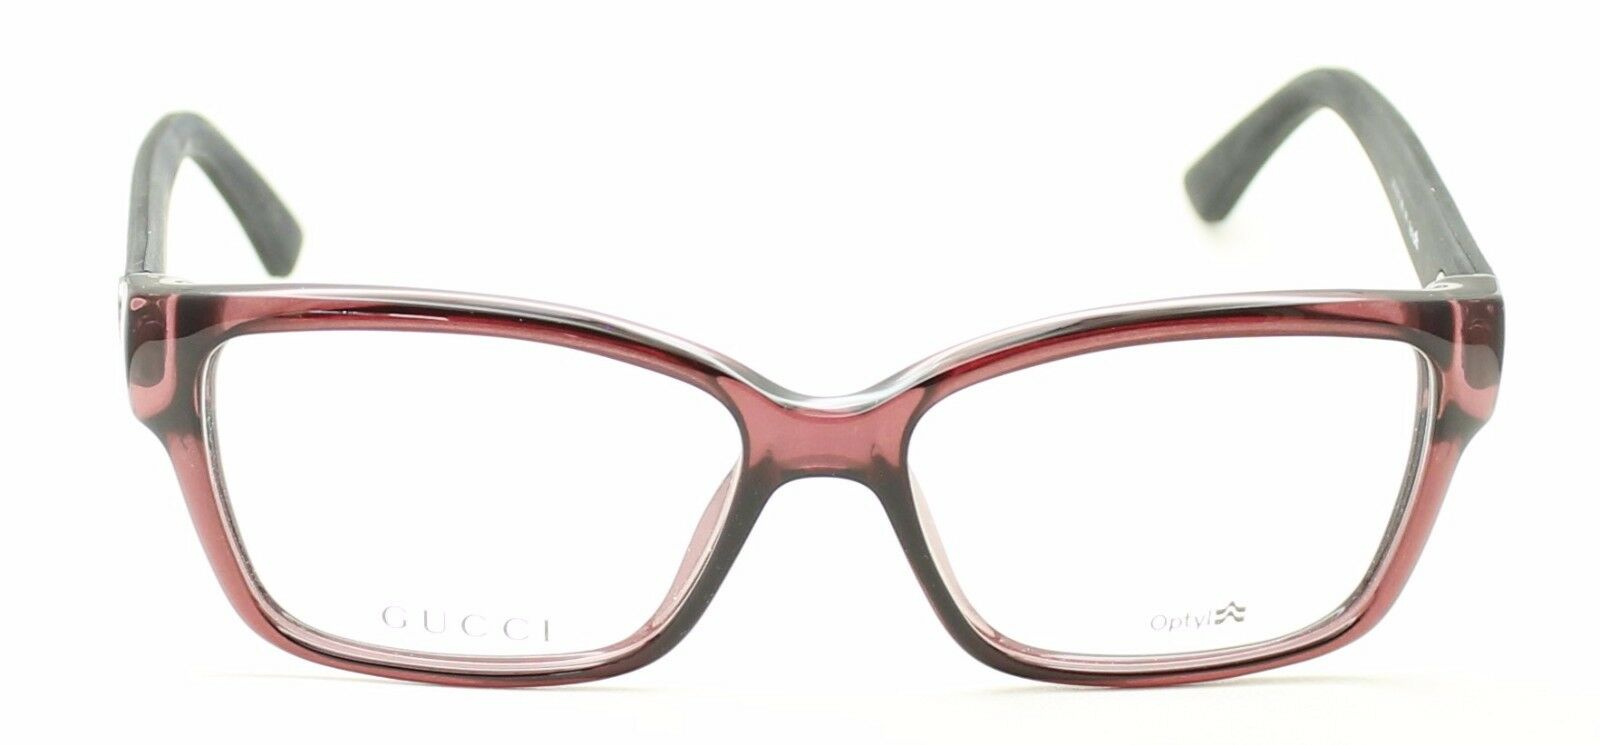 GUCCI GG 3717 INL 51mm Eyewear FRAMES Glasses RX Optical Eyeglasses New ...